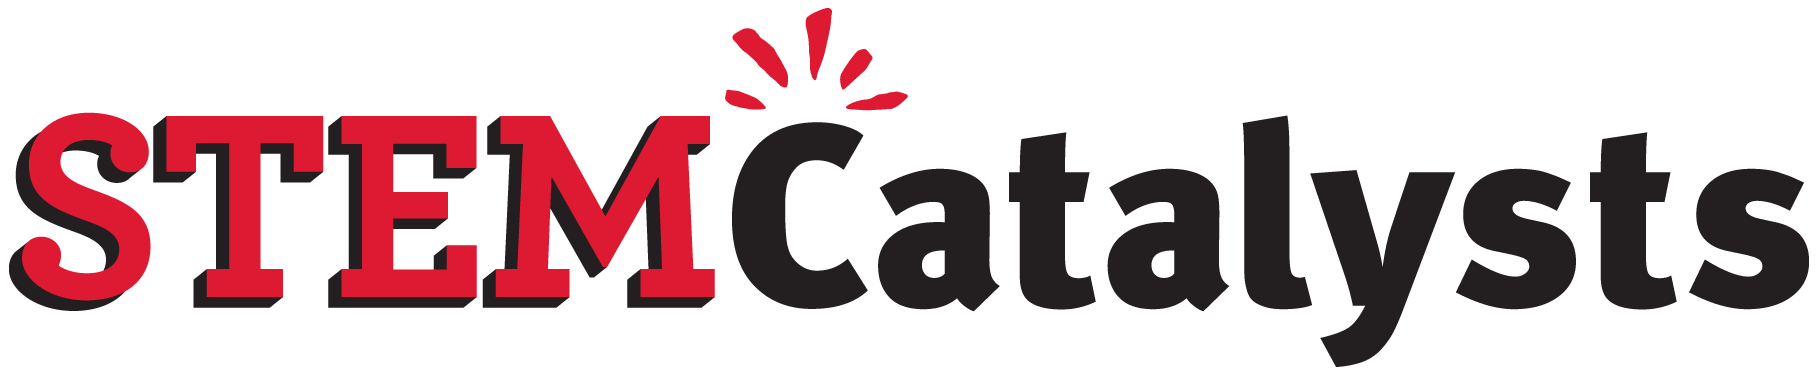 STEM Catalysts logo